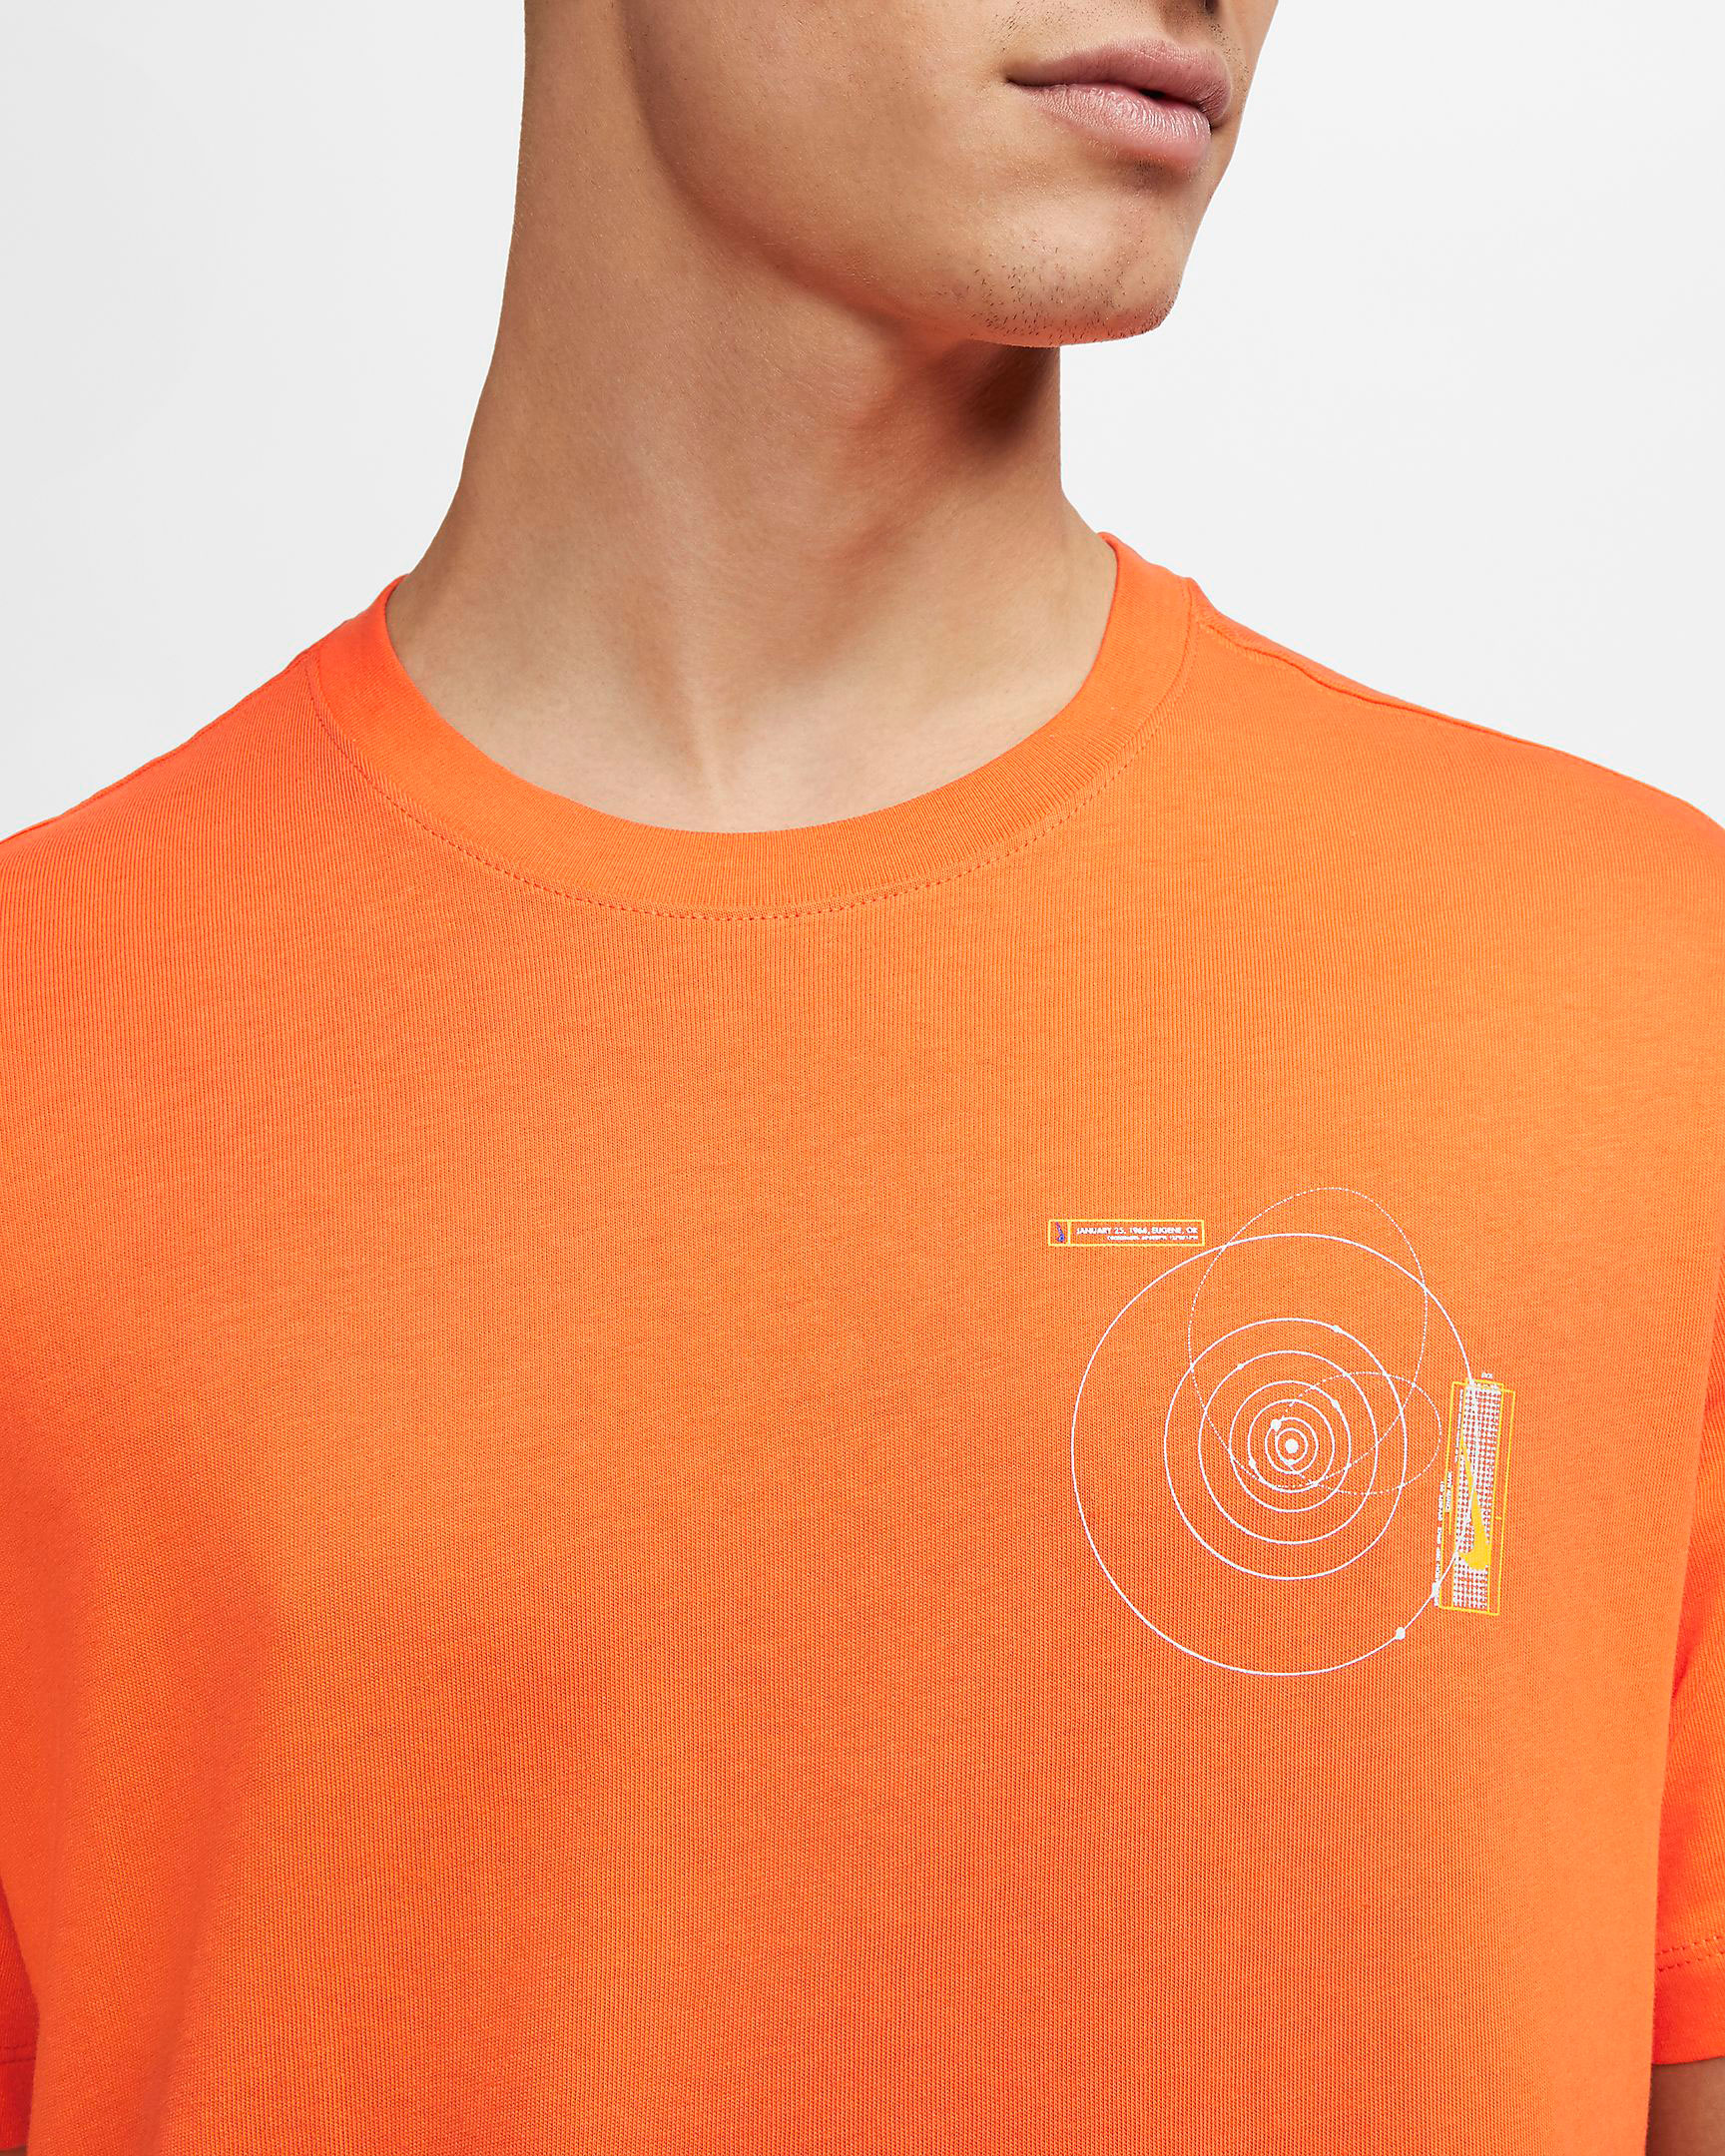 nike-supernova-shirt-orange-3